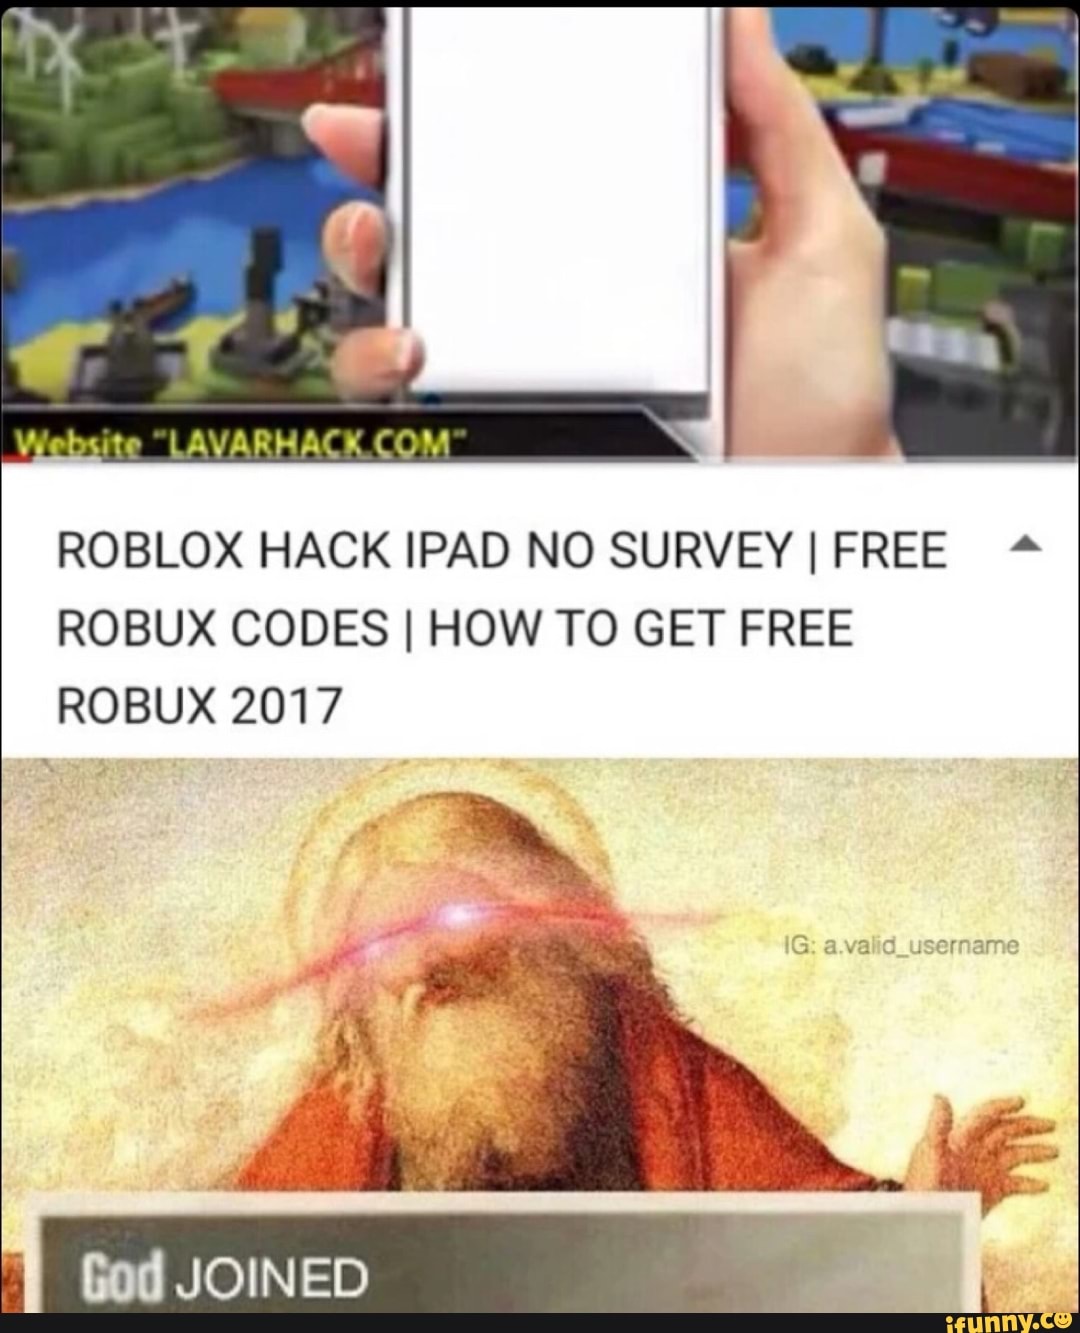 Roblox Hack Ipad No Survey I Free Robux Codes I How To Get Free